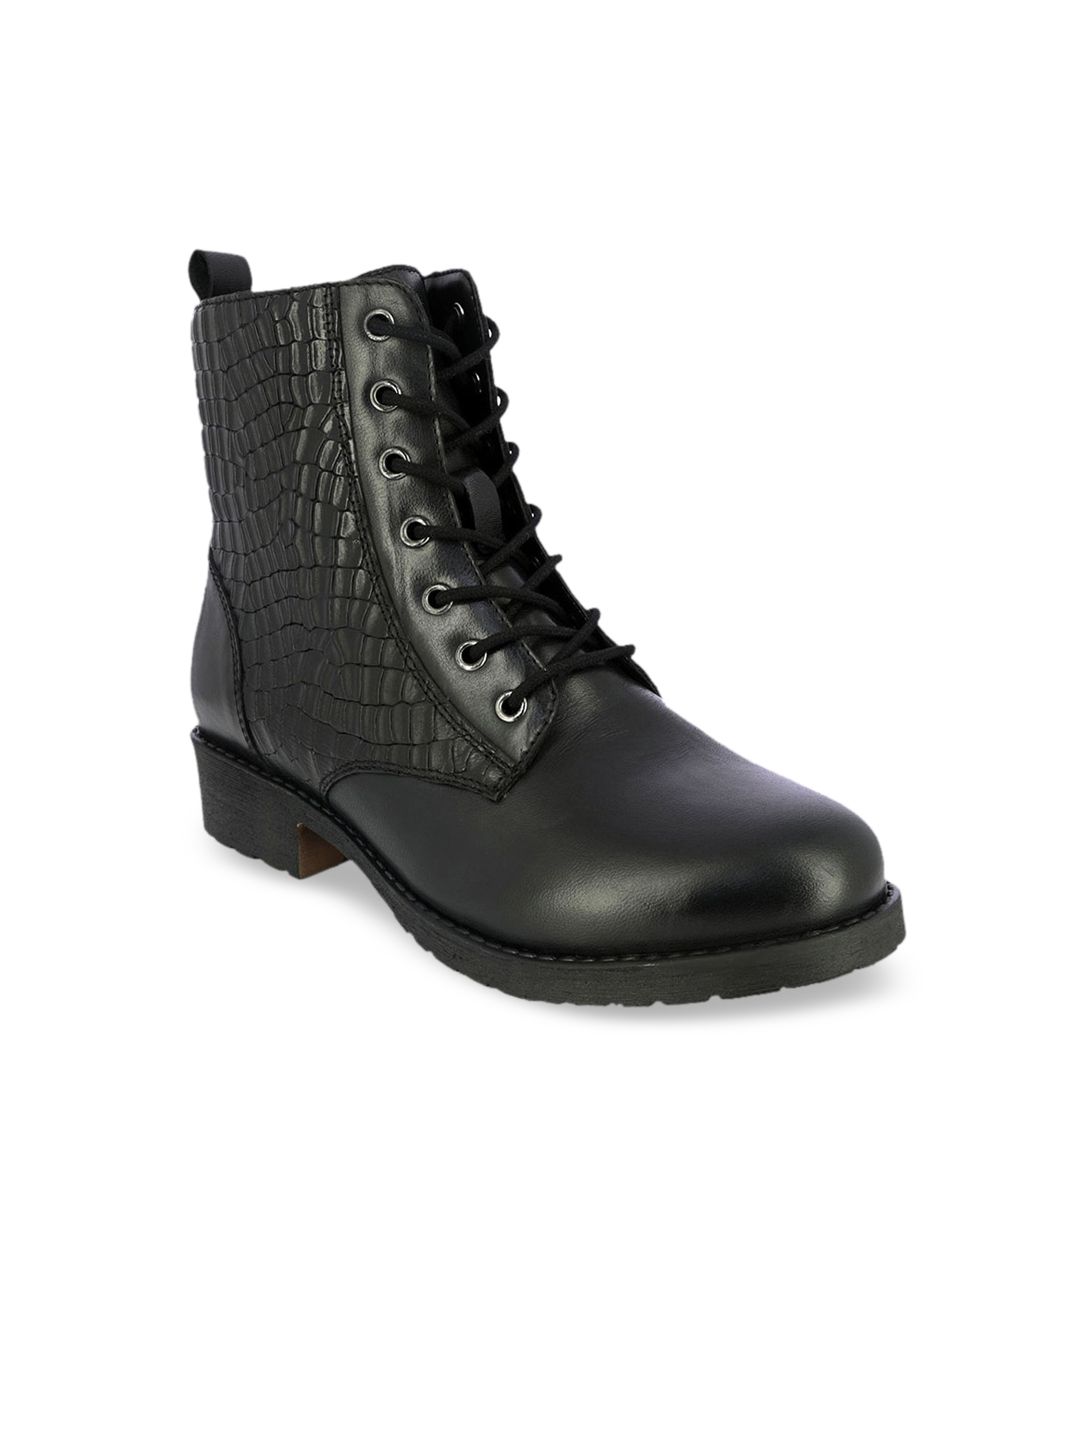 Alberto Torresi Women Black Woven Design Leather Flat Boots Price in India